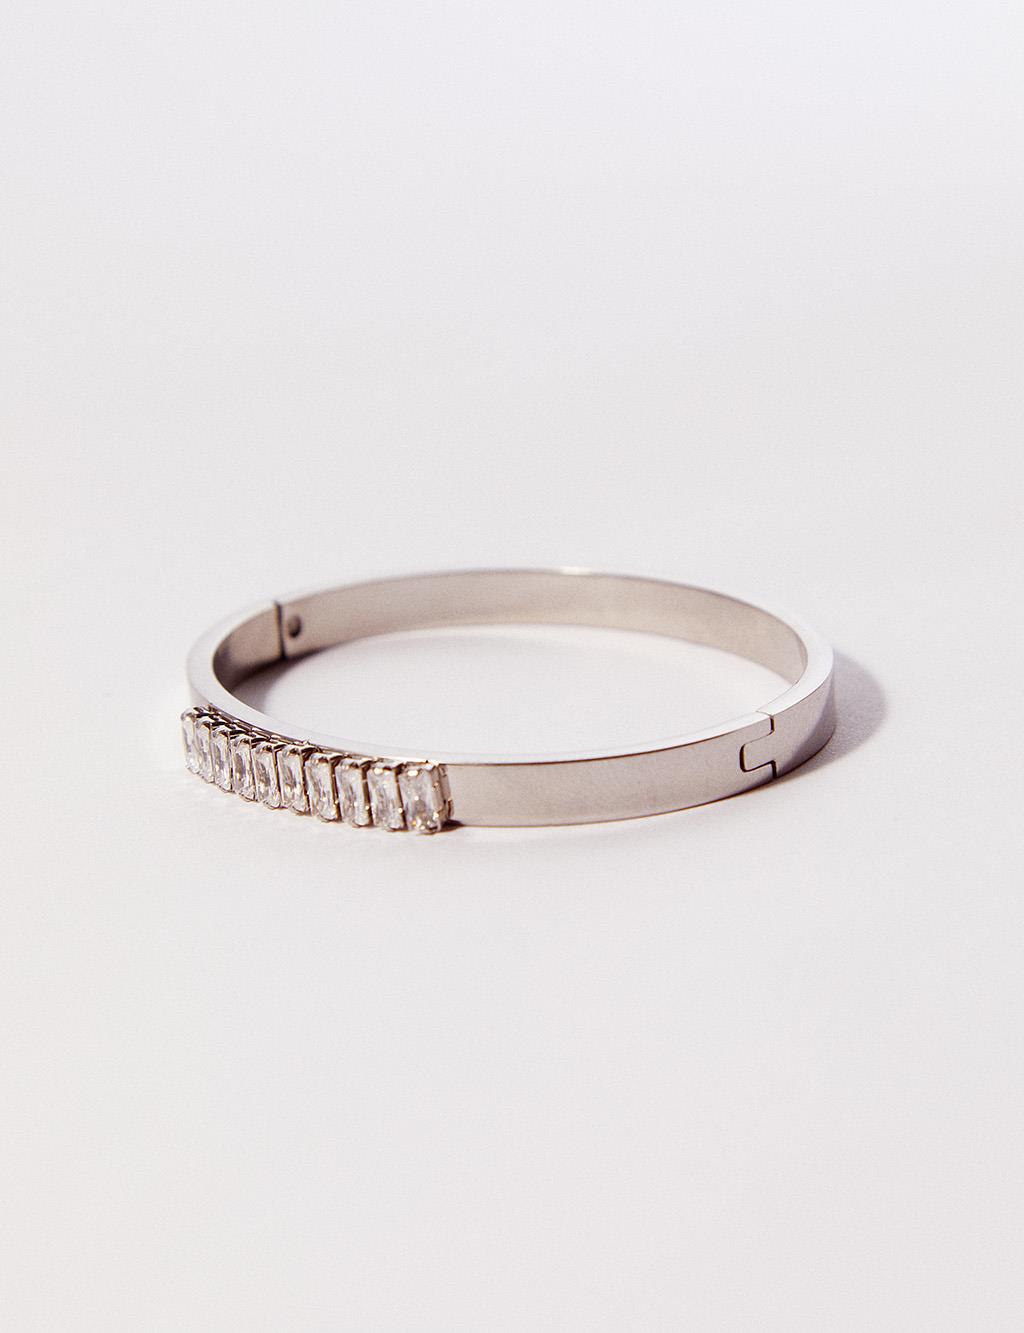 Stone Steel Bracelet Silver Color